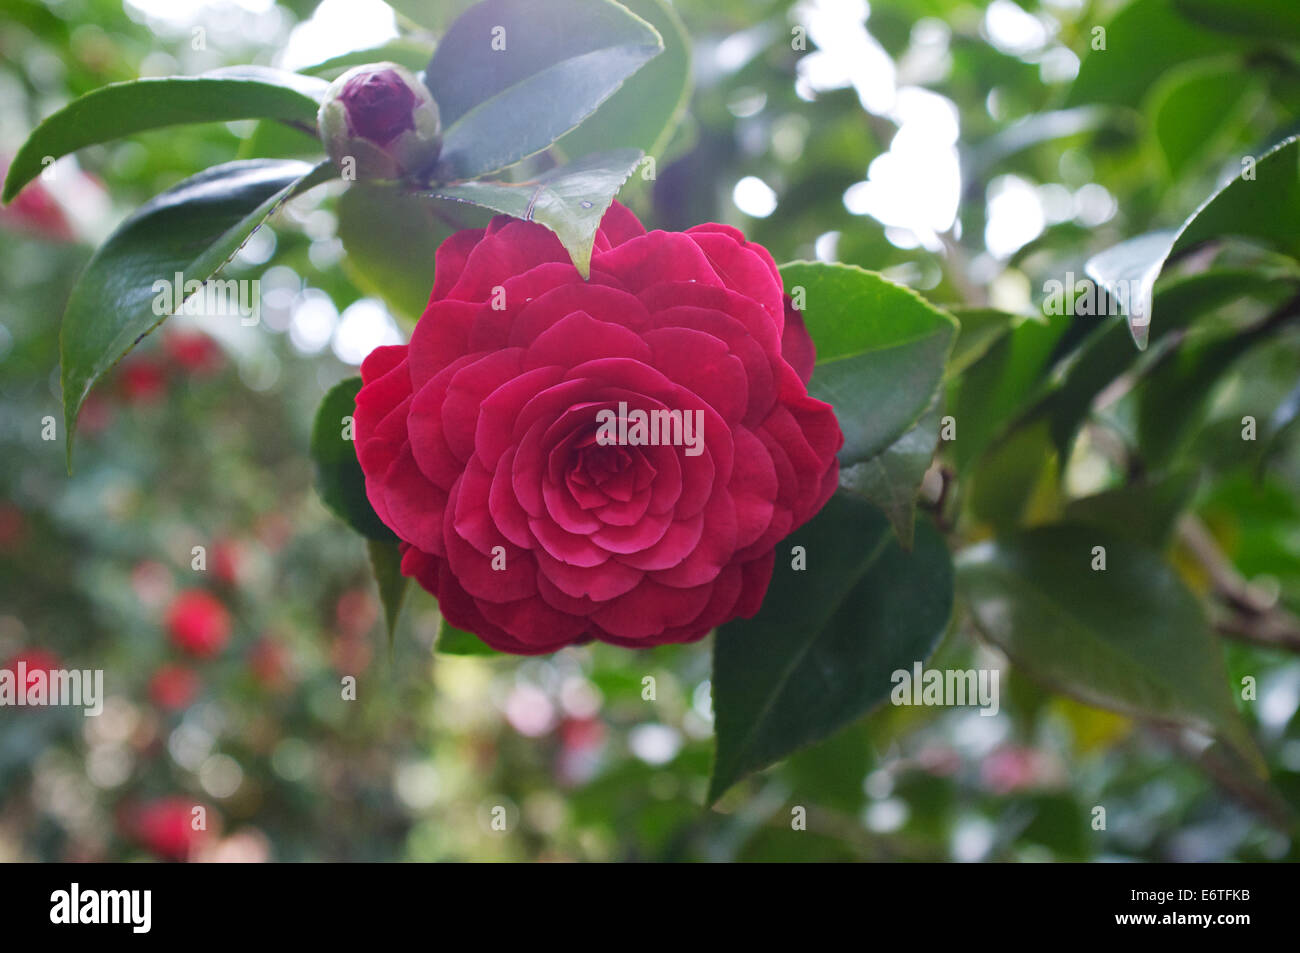 One of the many flowers at Araluen Botanical Park Stock Photo